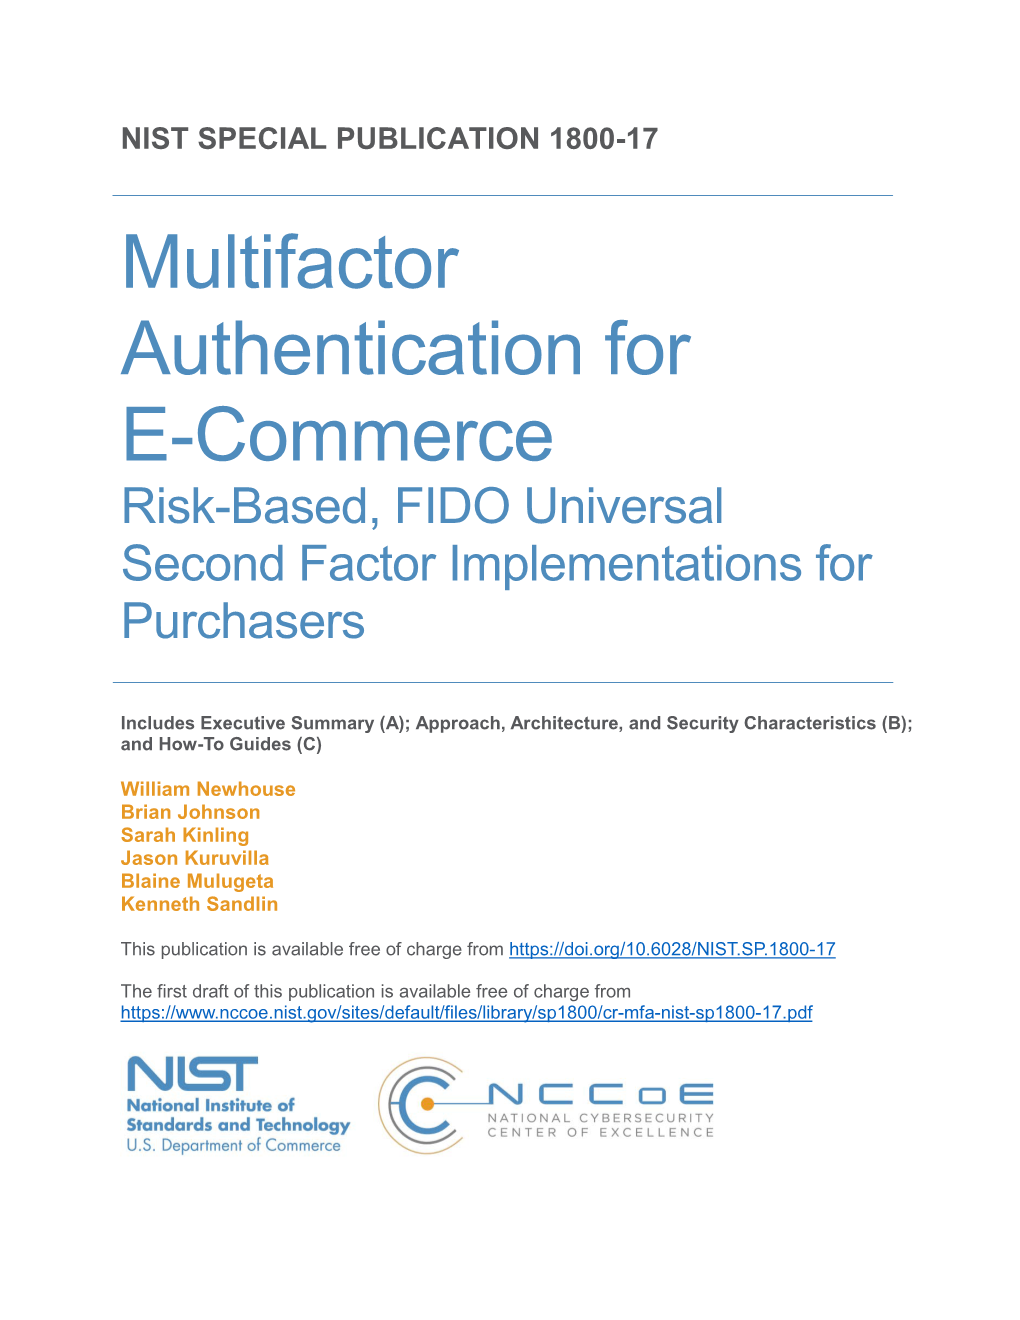 Multifactor Authentication for E-Commerce: Risk-Based, FIDO